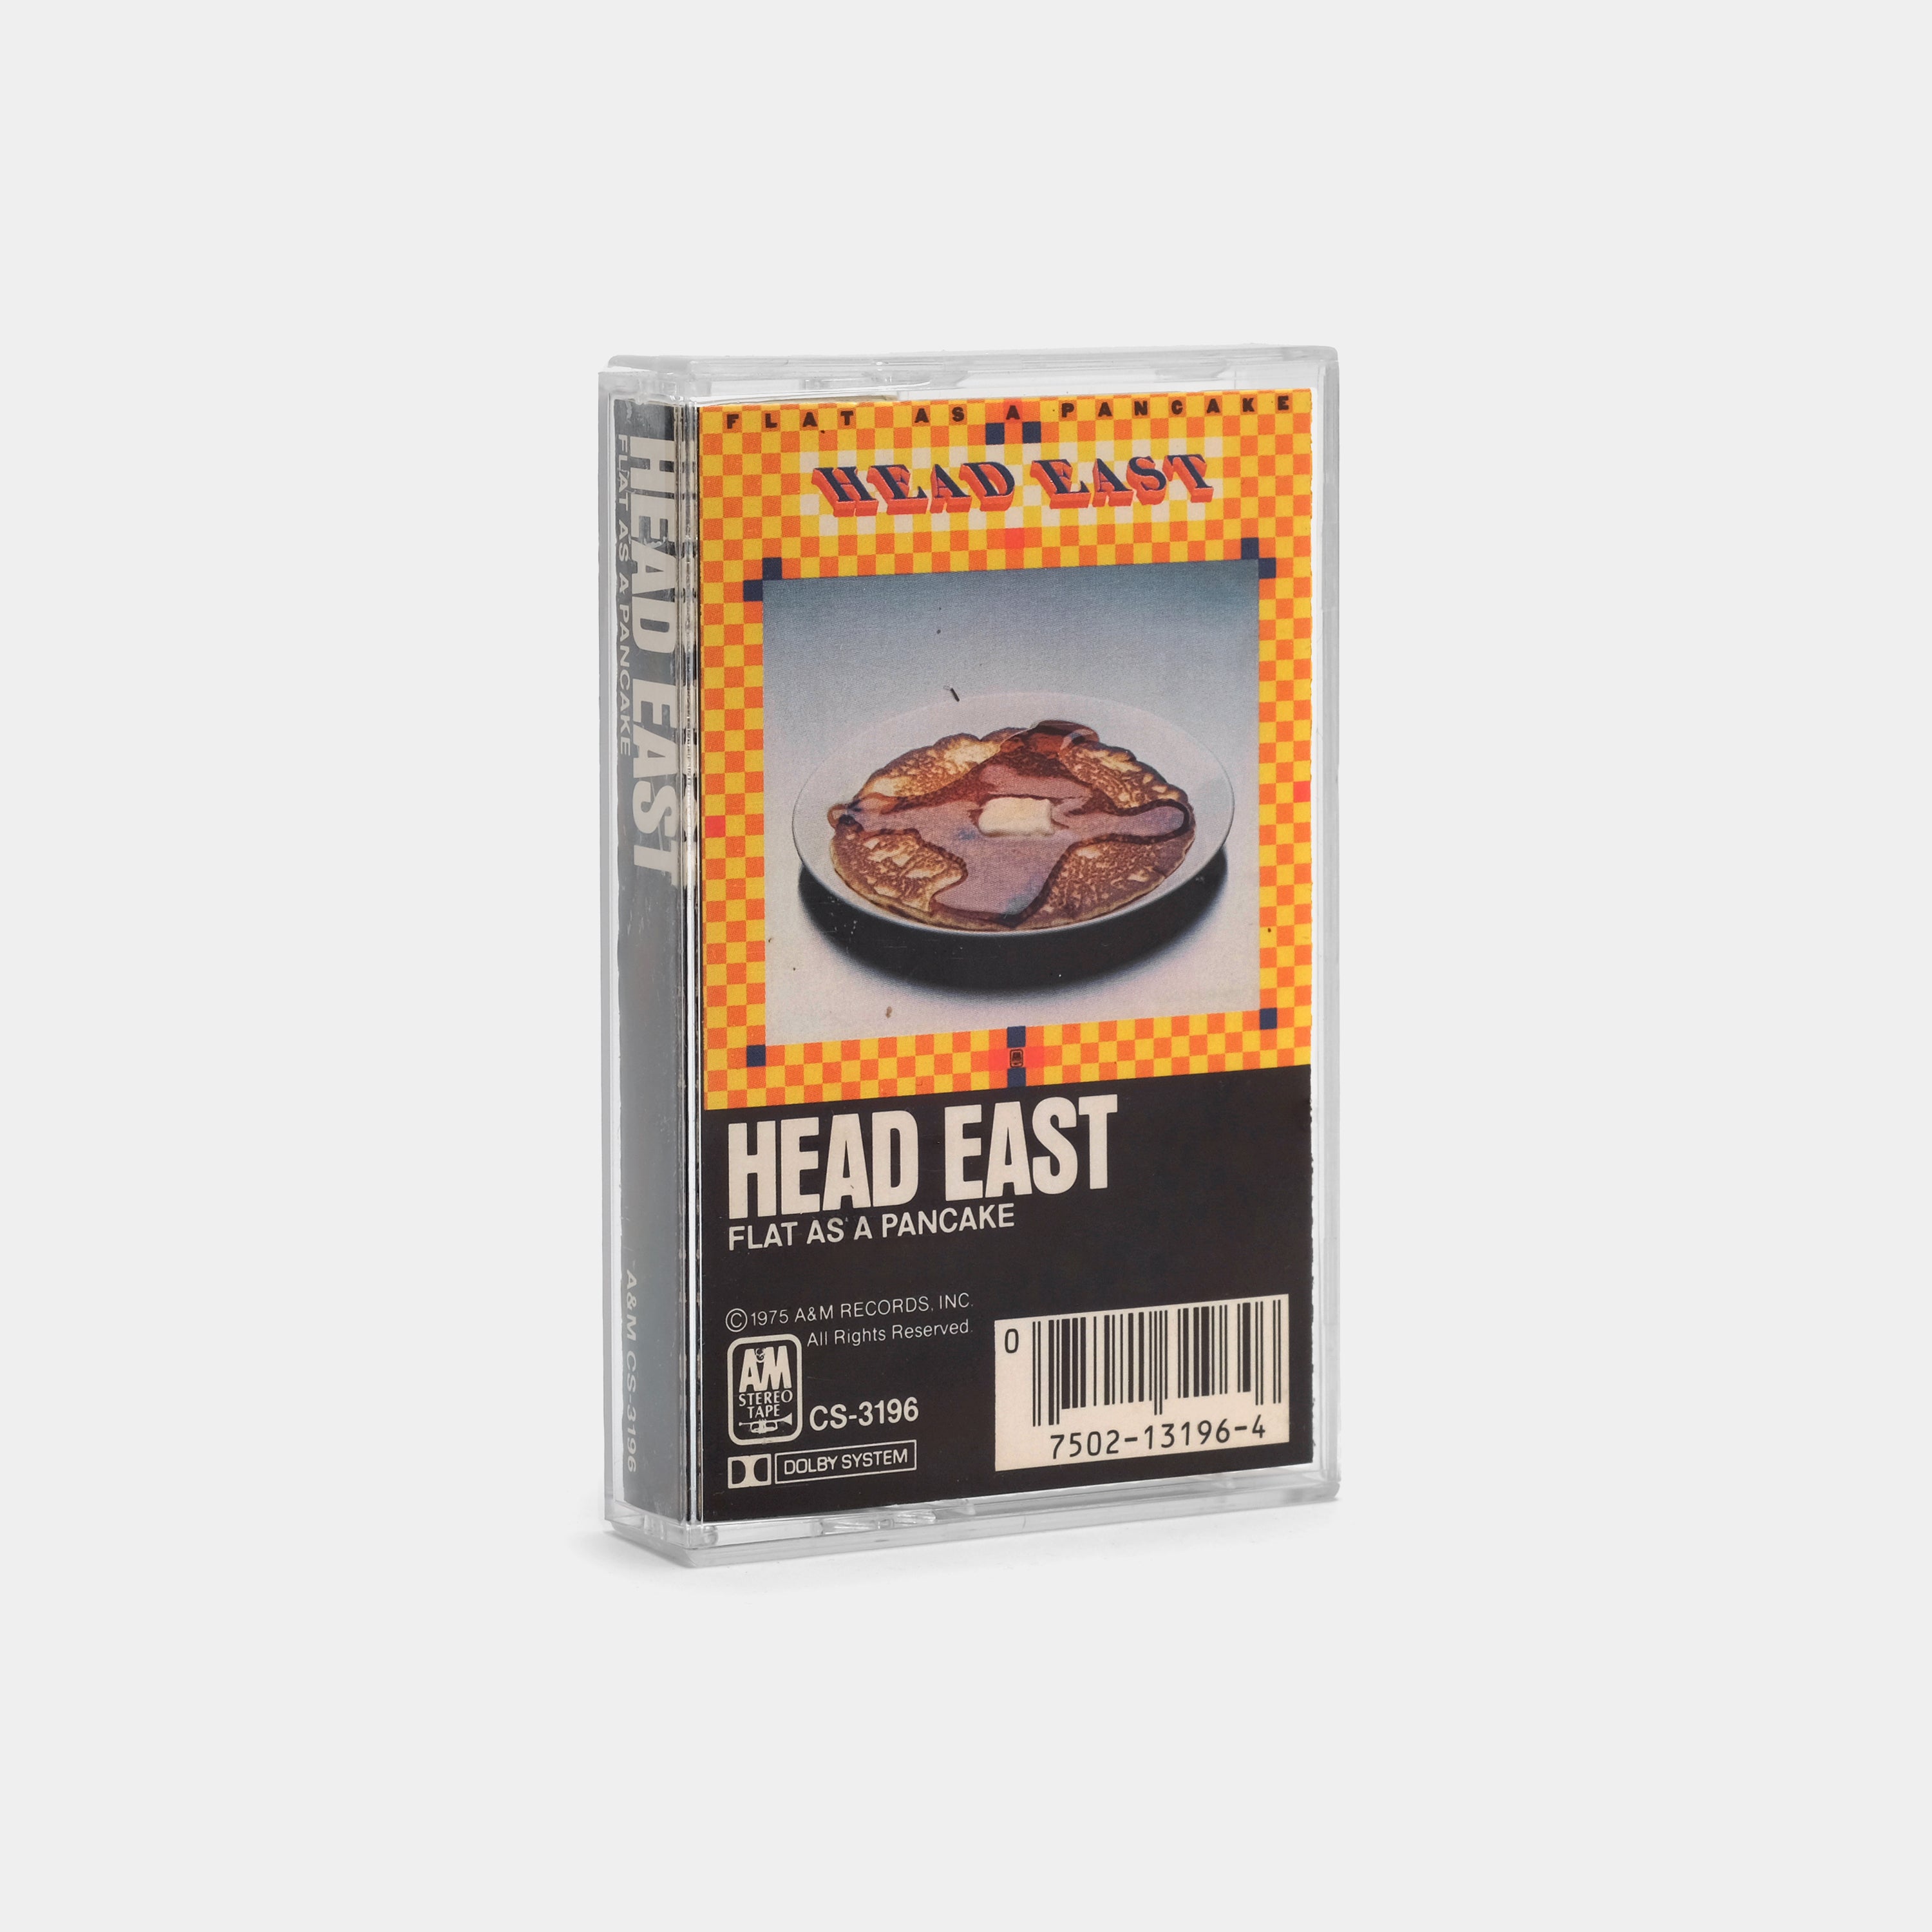 Head East - Flat As A Pancake Cassette Tape